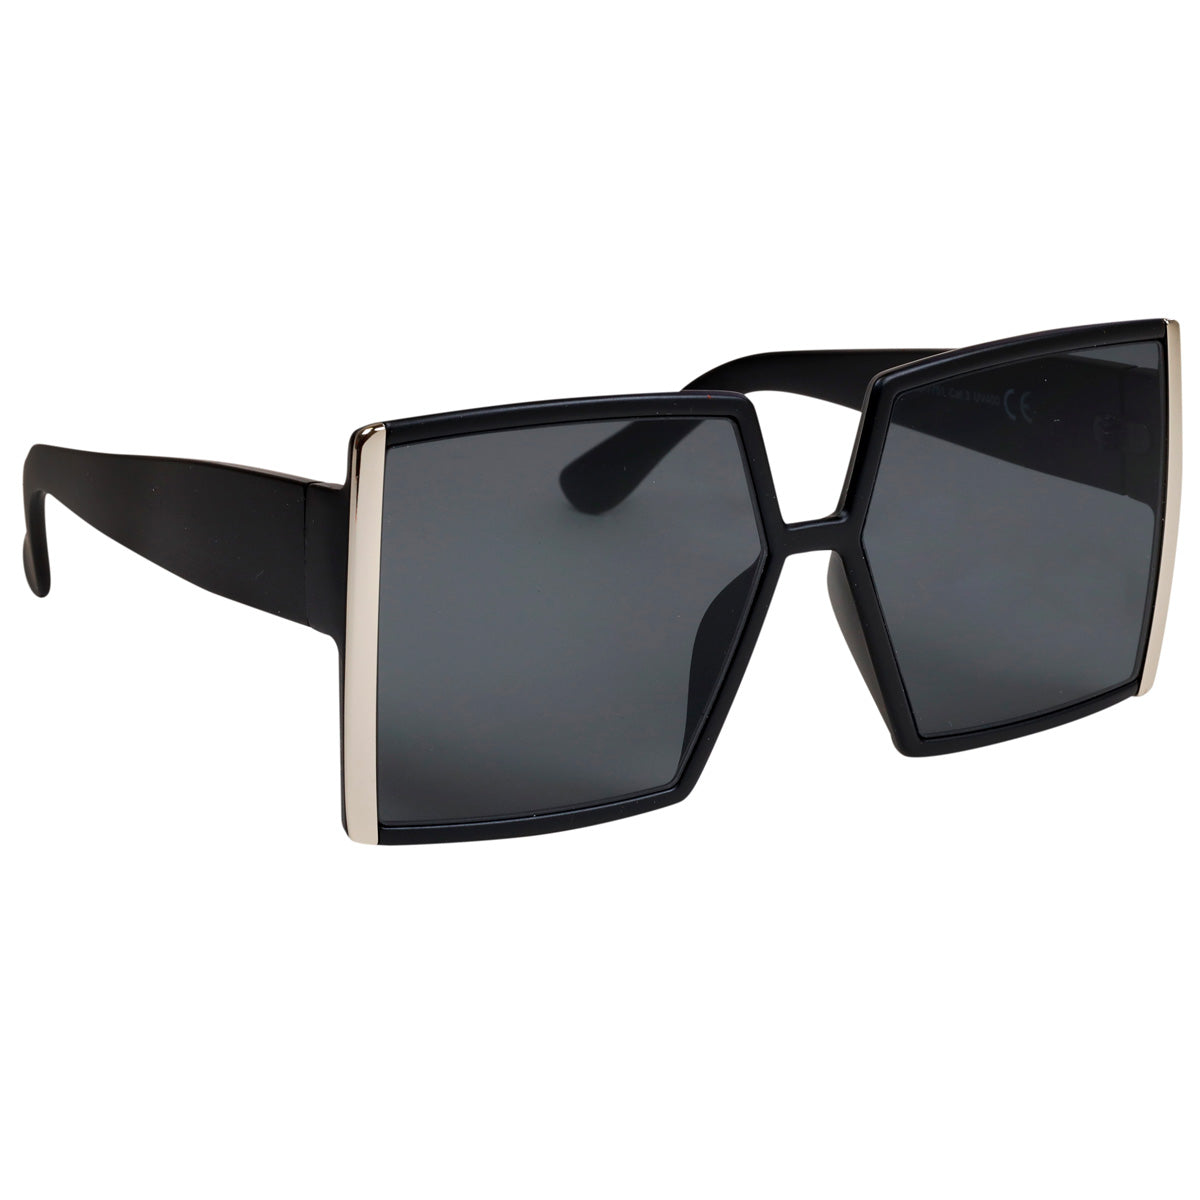 Women's big sunglasses - square sunglasses € 15.99